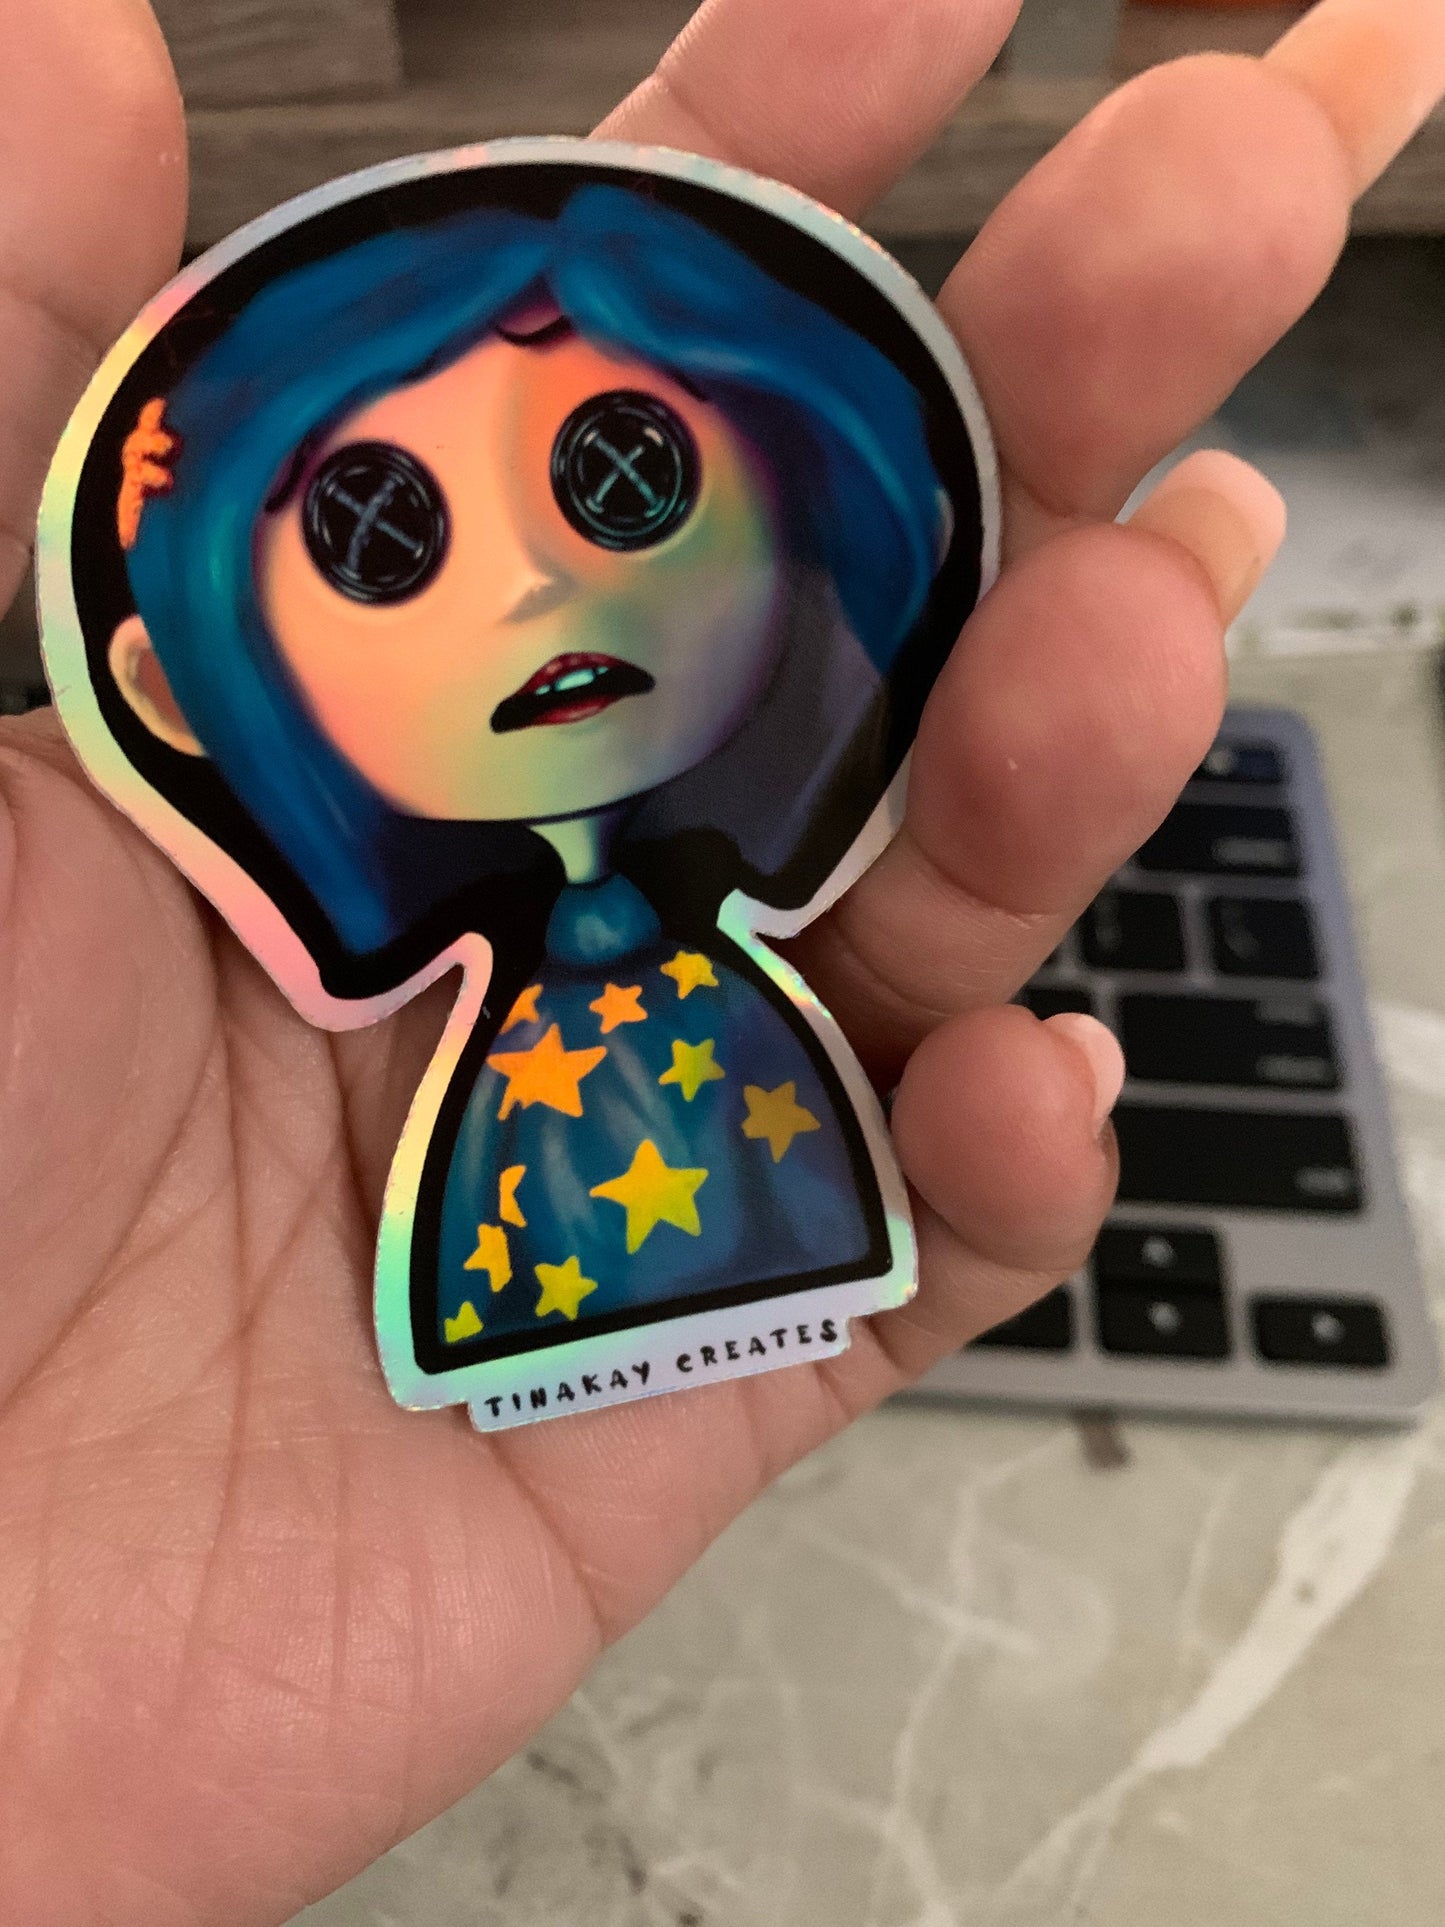 Holographic Coraline Button Eyes Art Sticker Decor - TinakayCreations